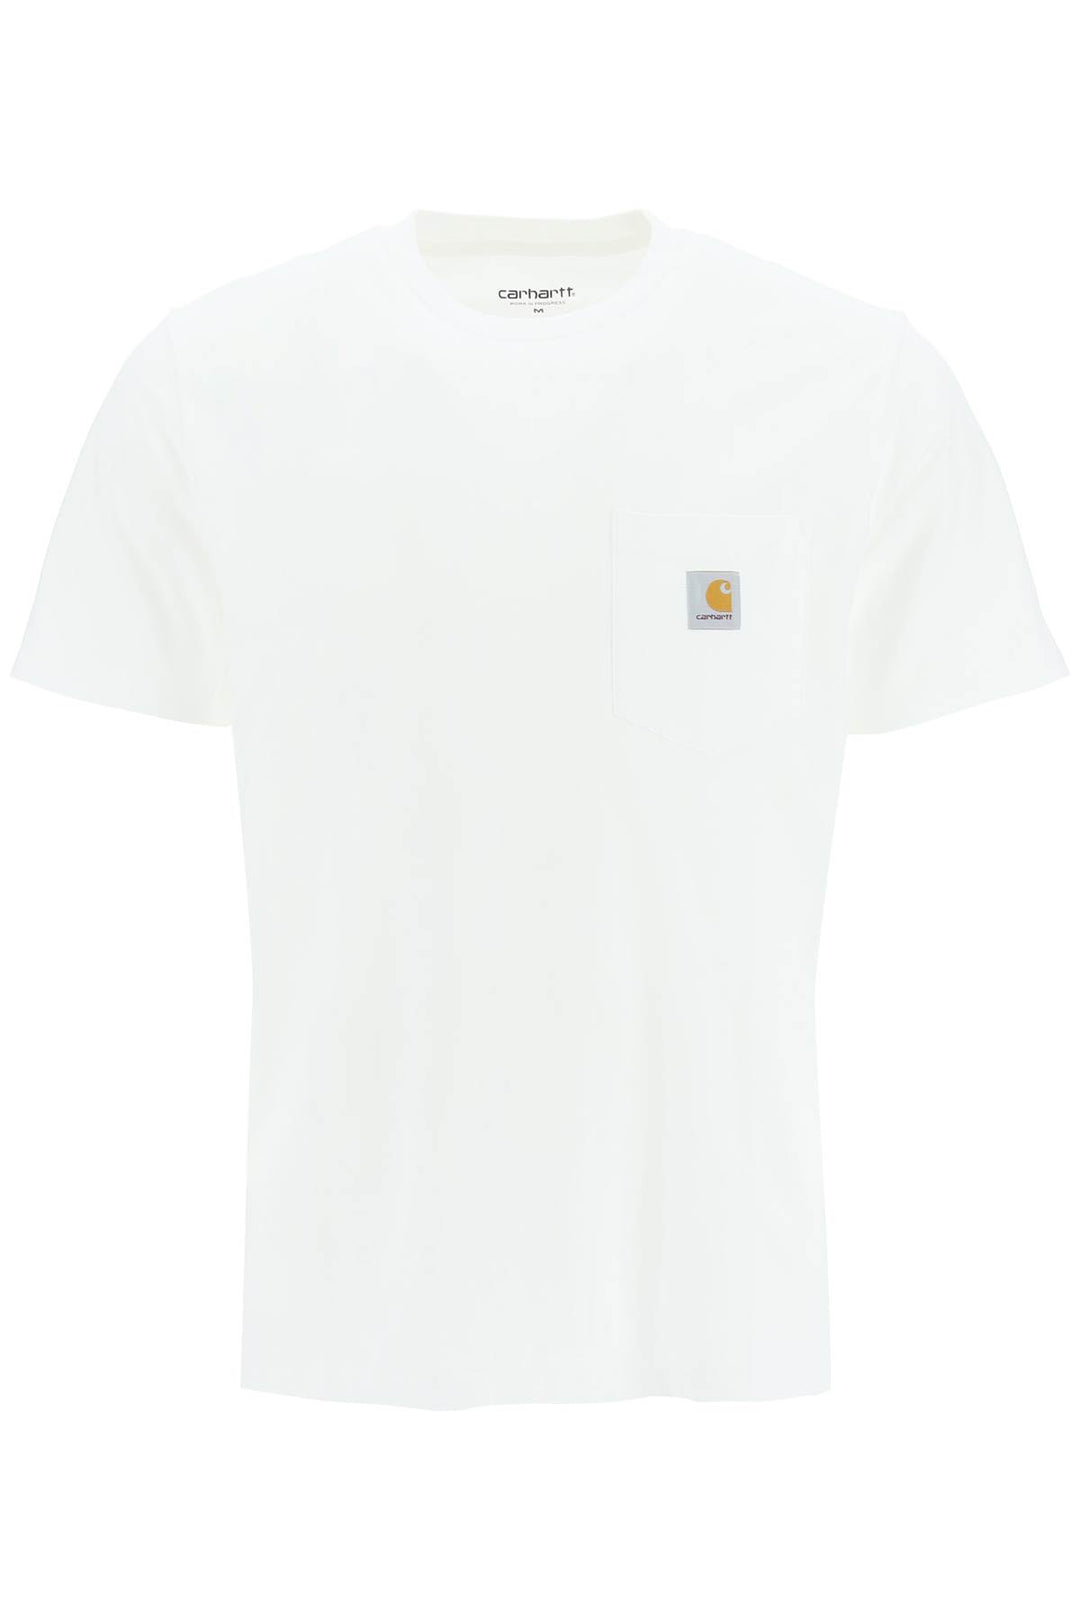 T Shirt 'Pocket' Con Etichetta Logo - Carhartt Wip - Uomo